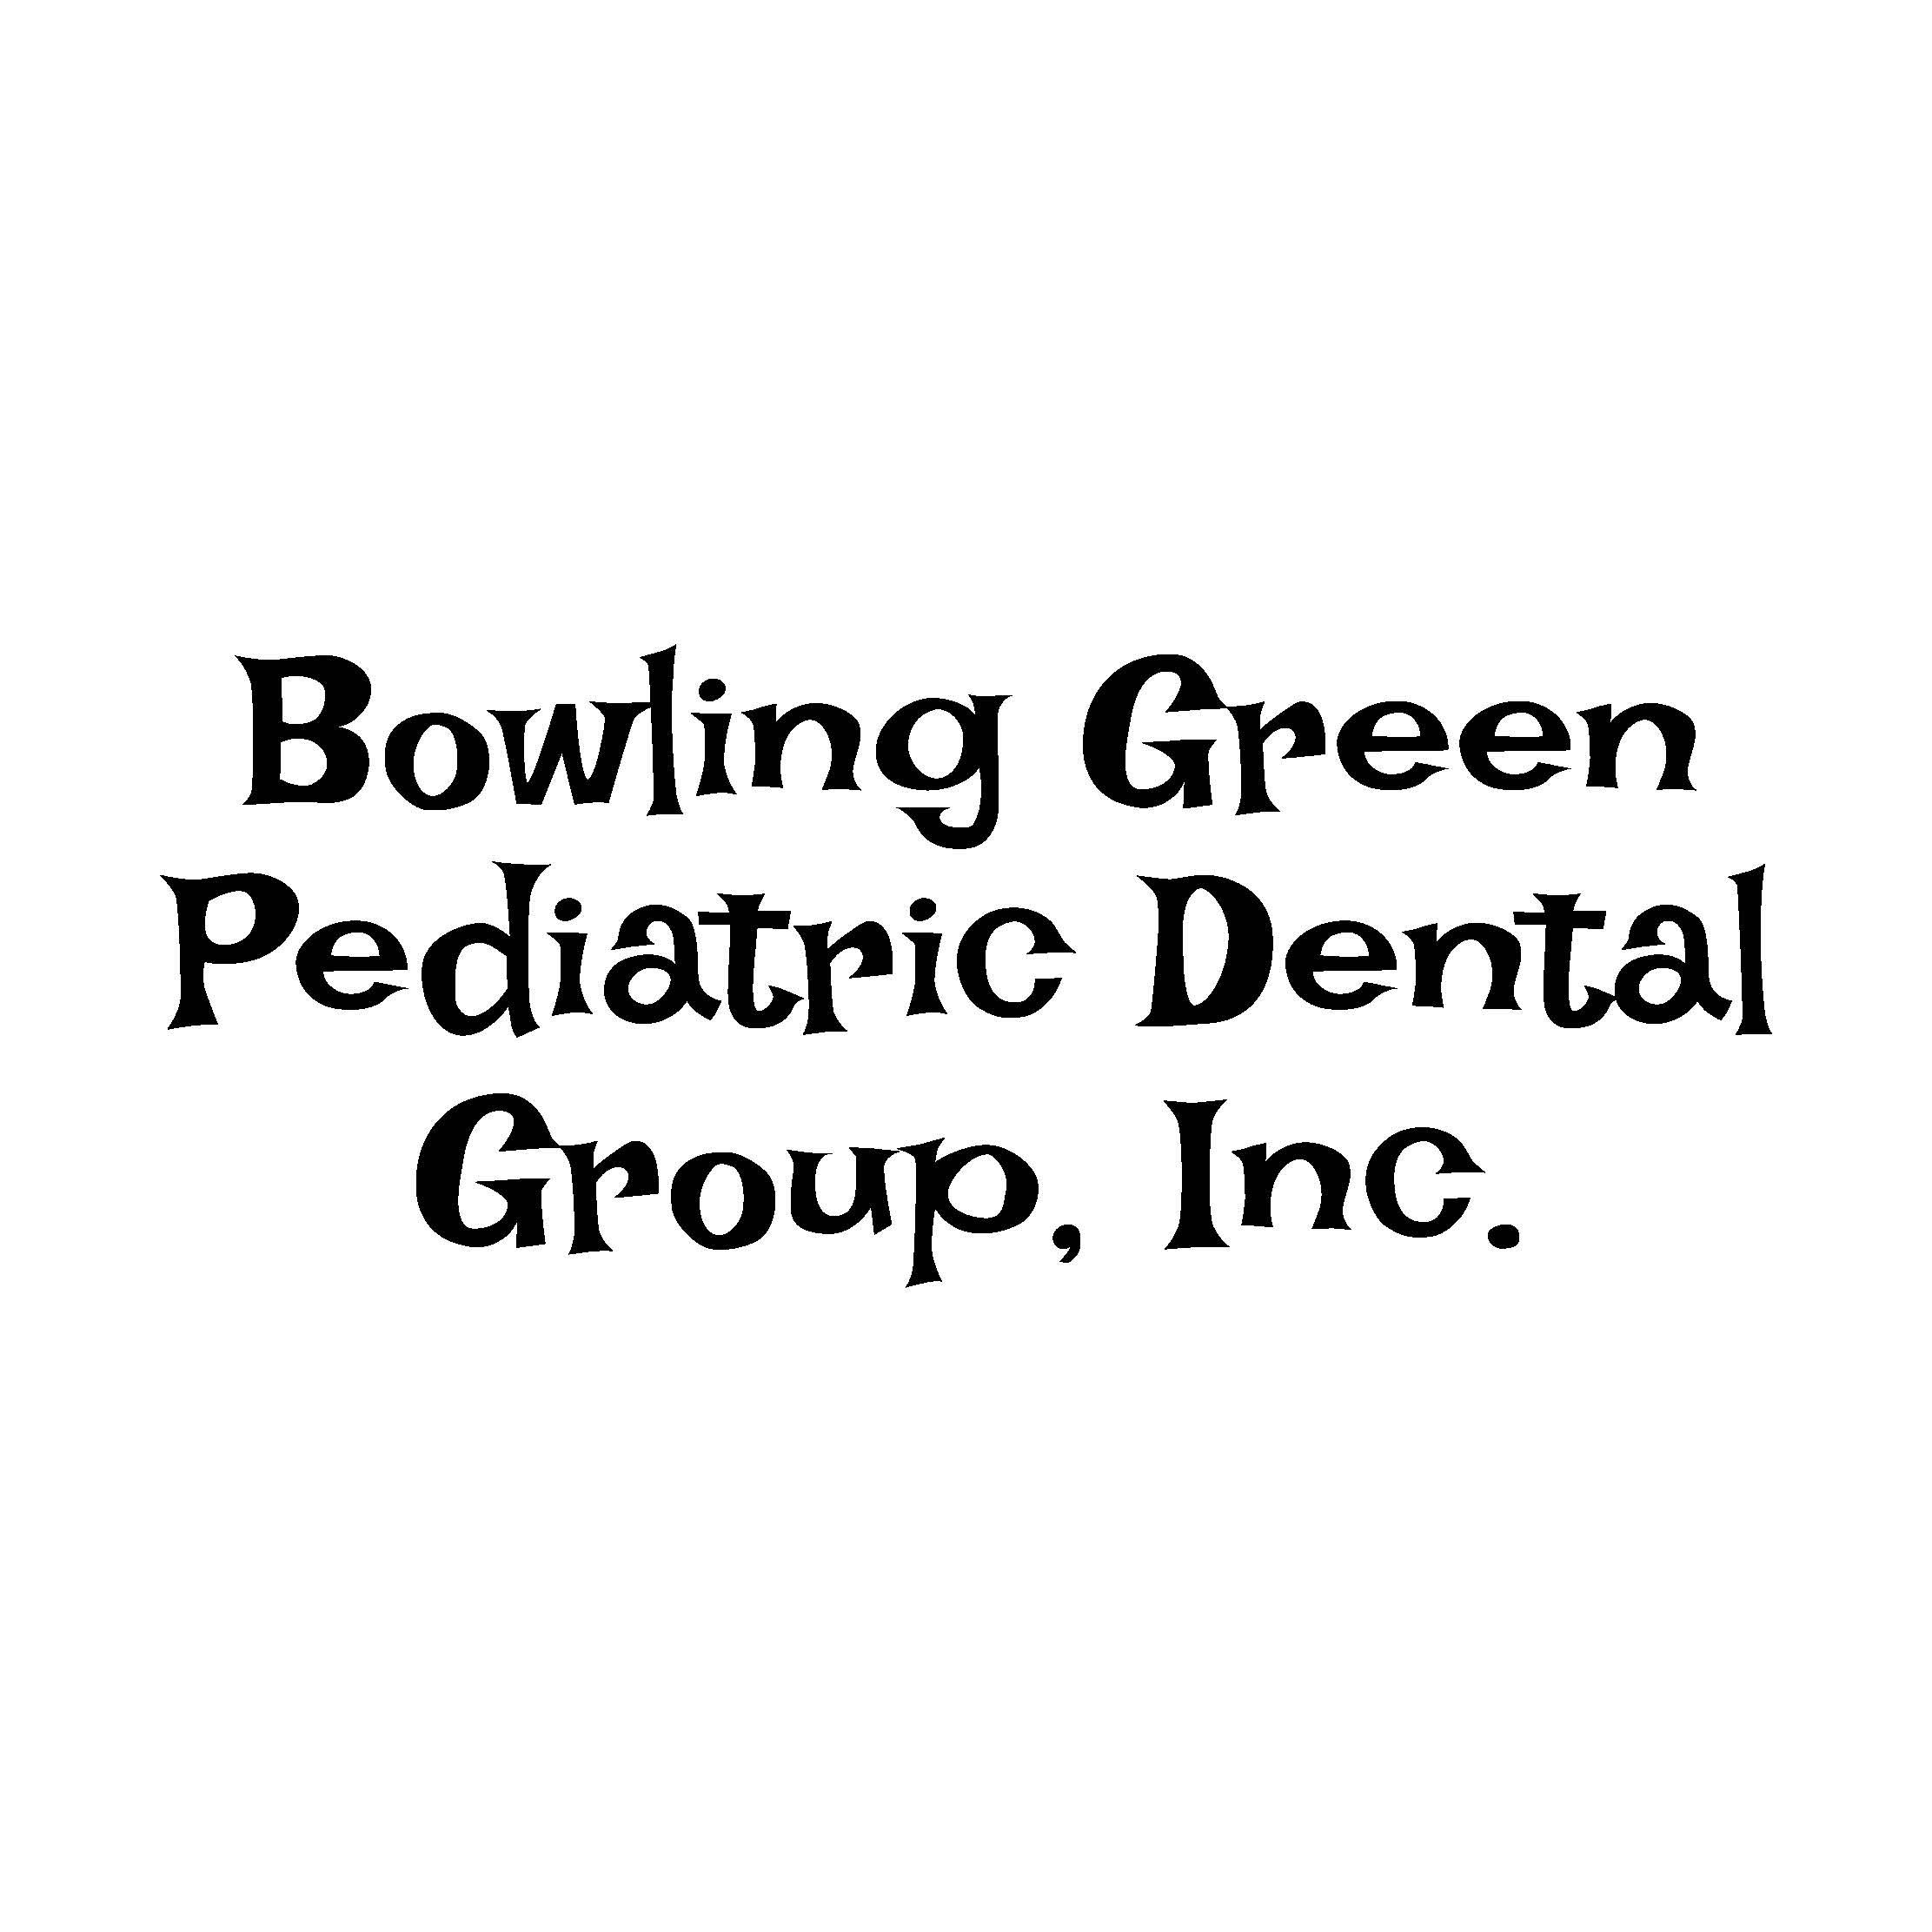 Bowling Green Pediatric Dental Group